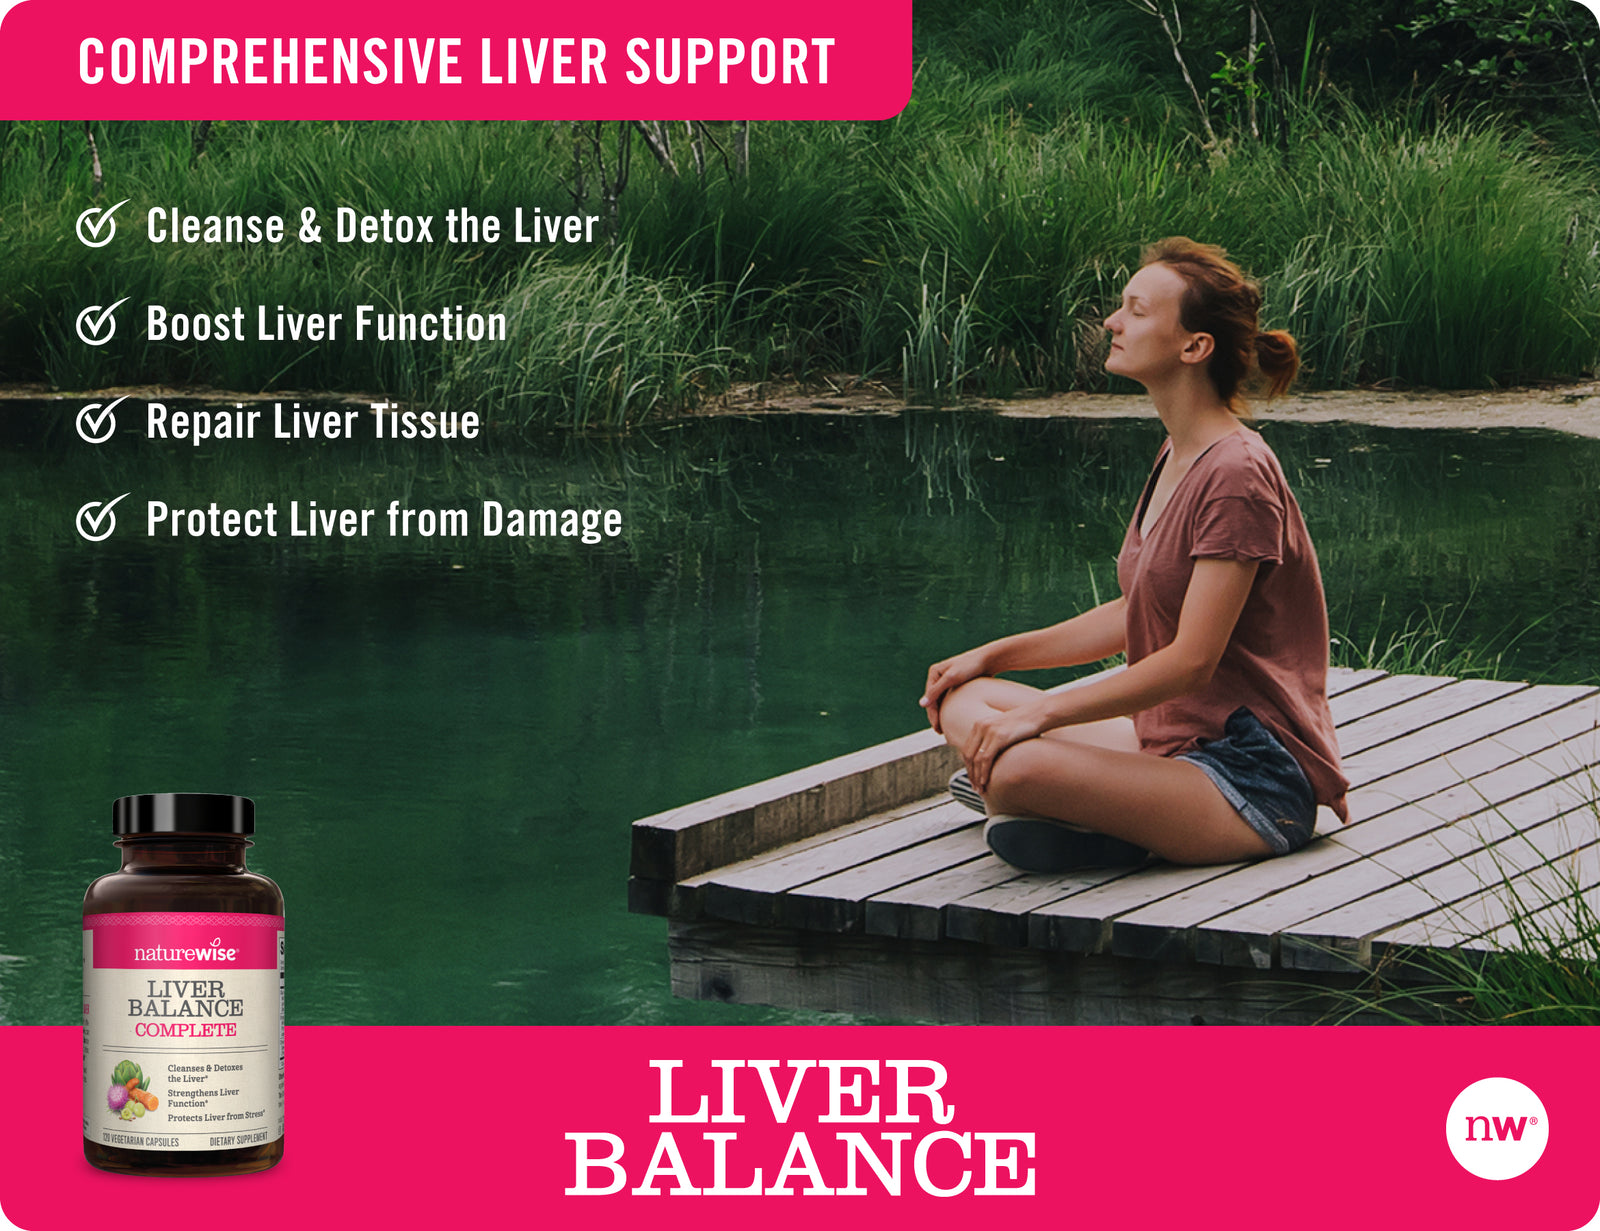 Liver Balance Complete benefits 